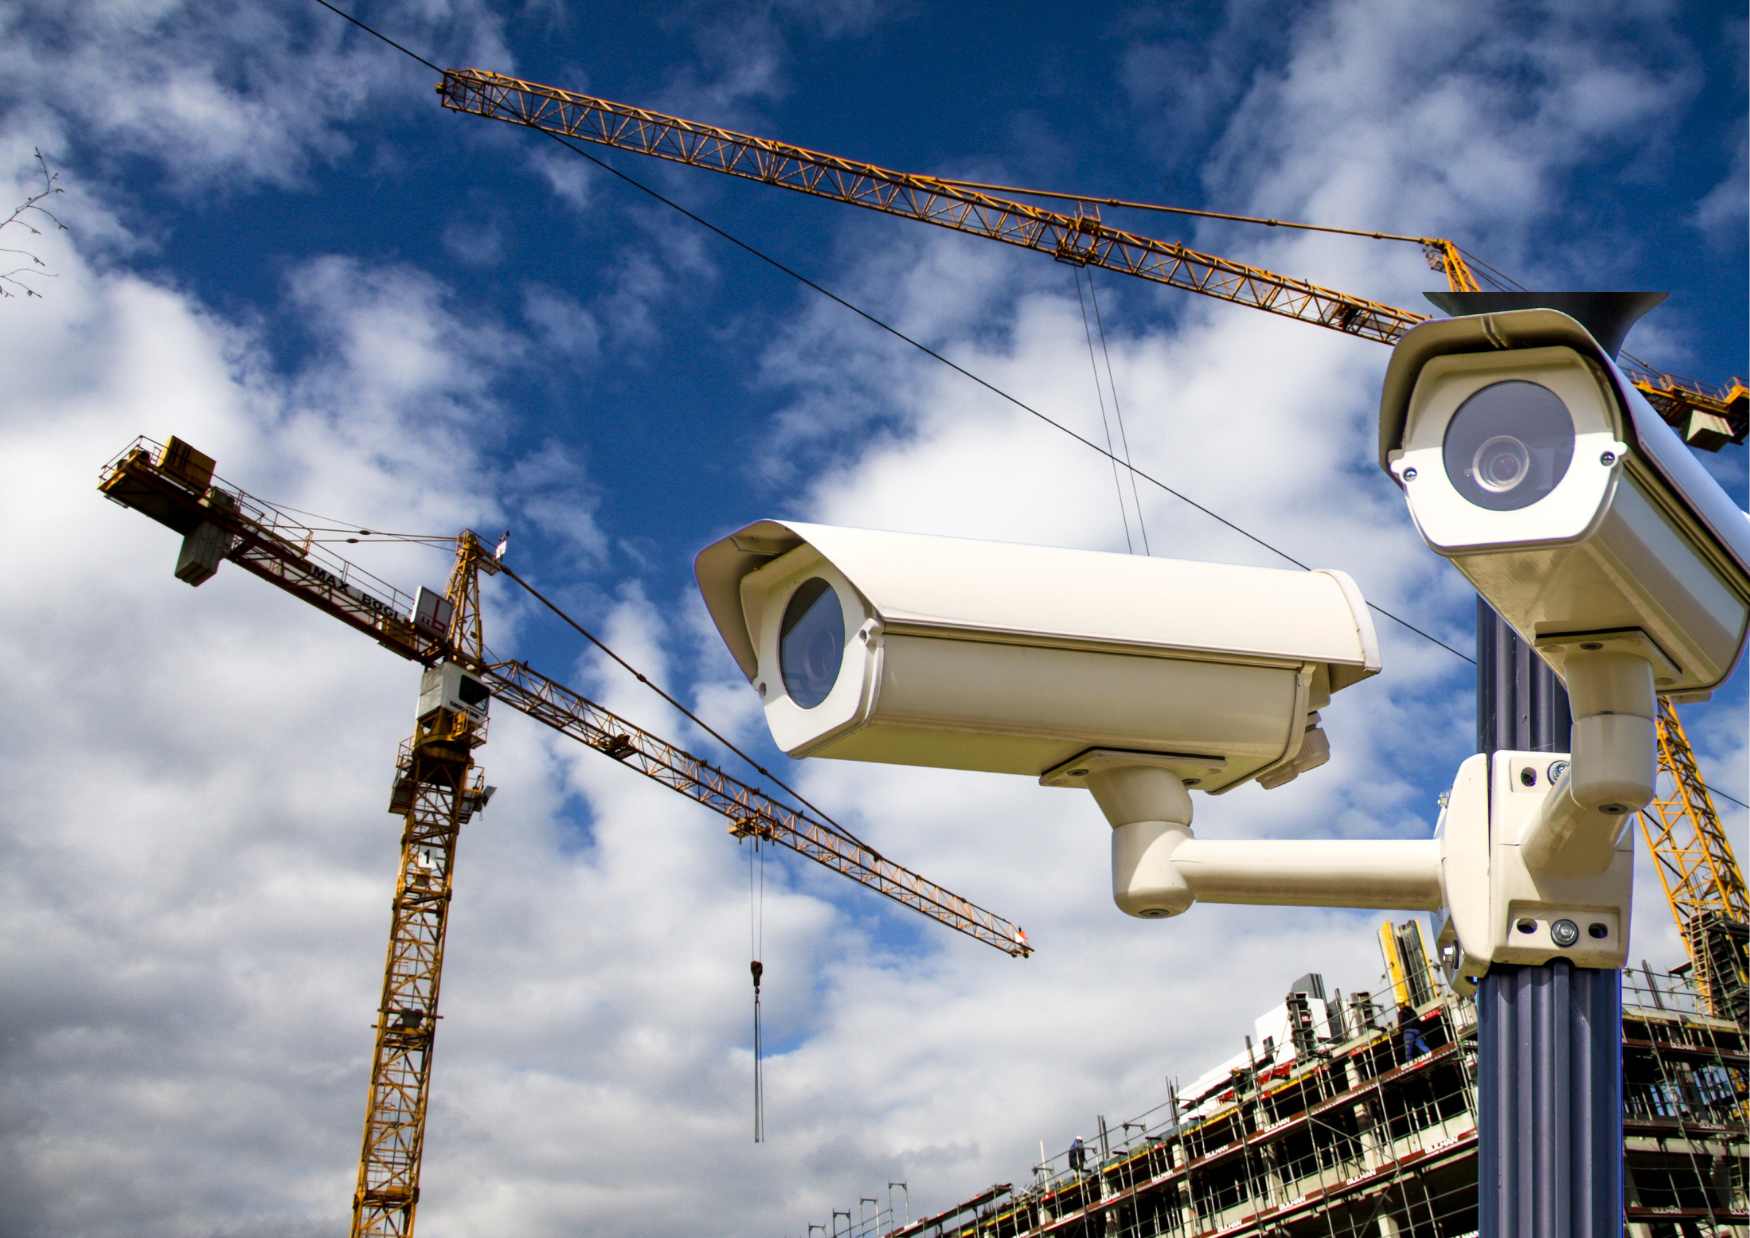 CCTV services in contruction sites.